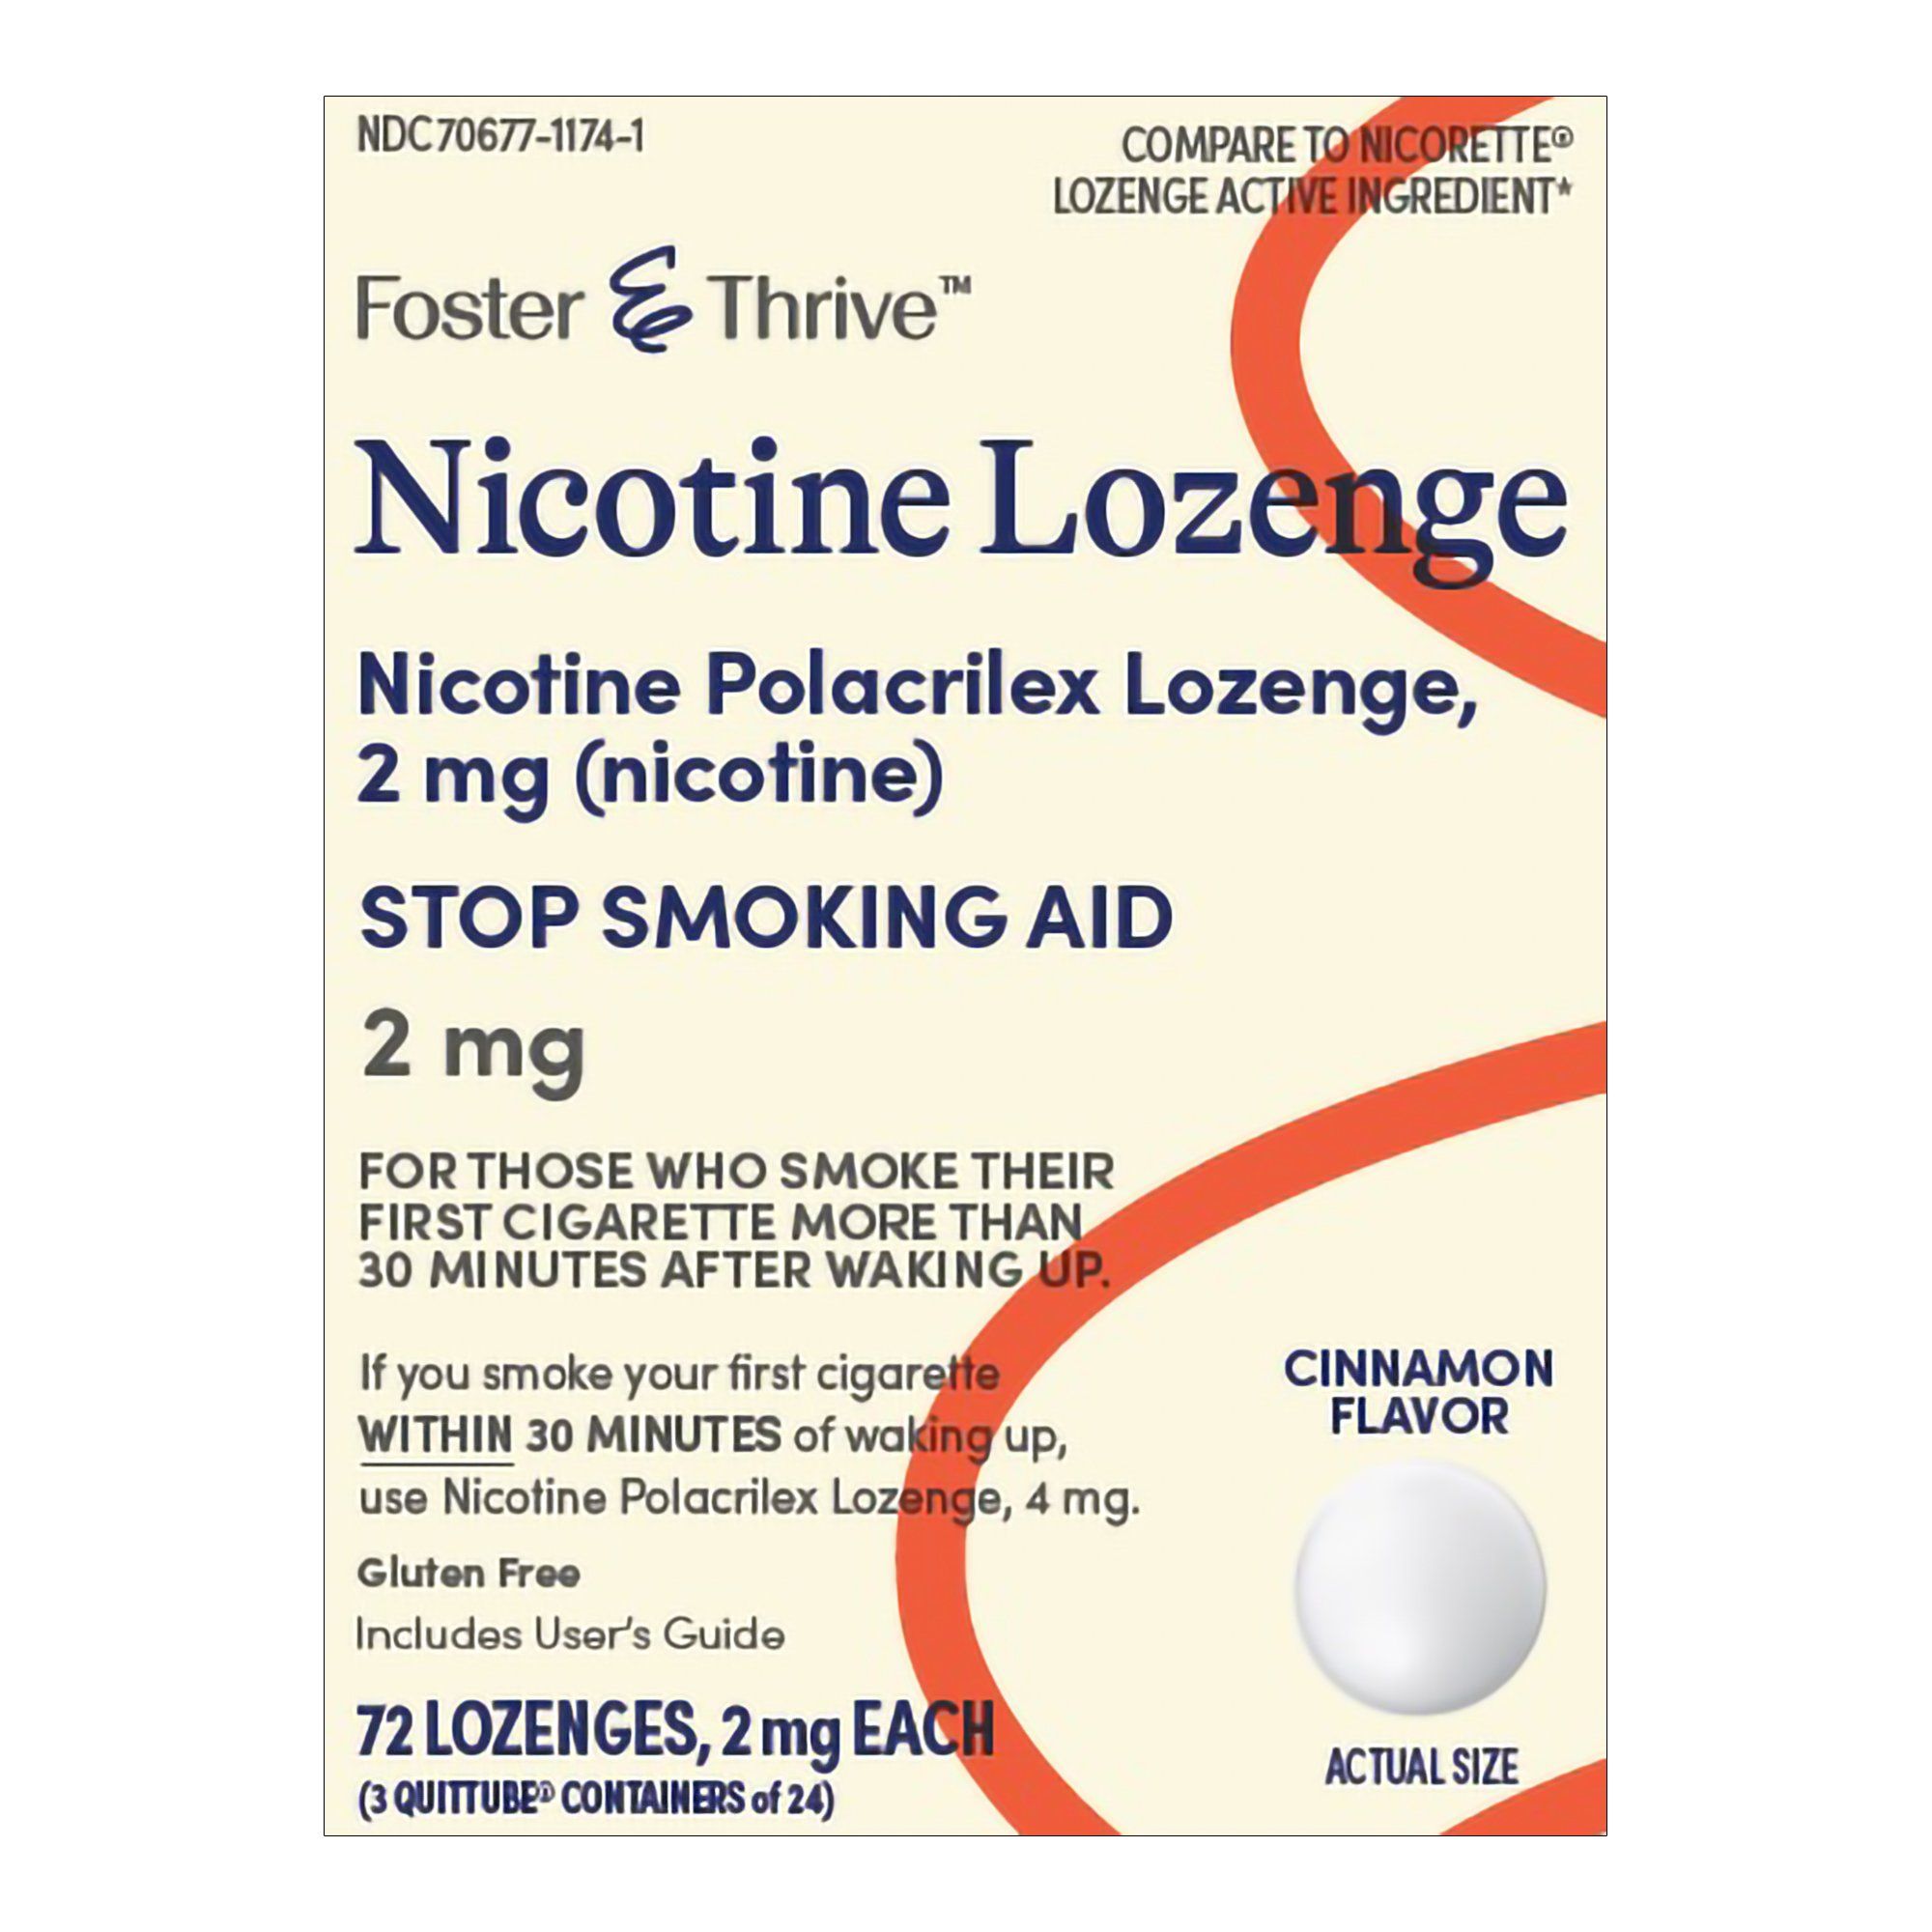 Foster & Thrive Stop Smoking Aid Nicotine Lozenges, 2 mg, Cinnamon Flavor - 72 ct